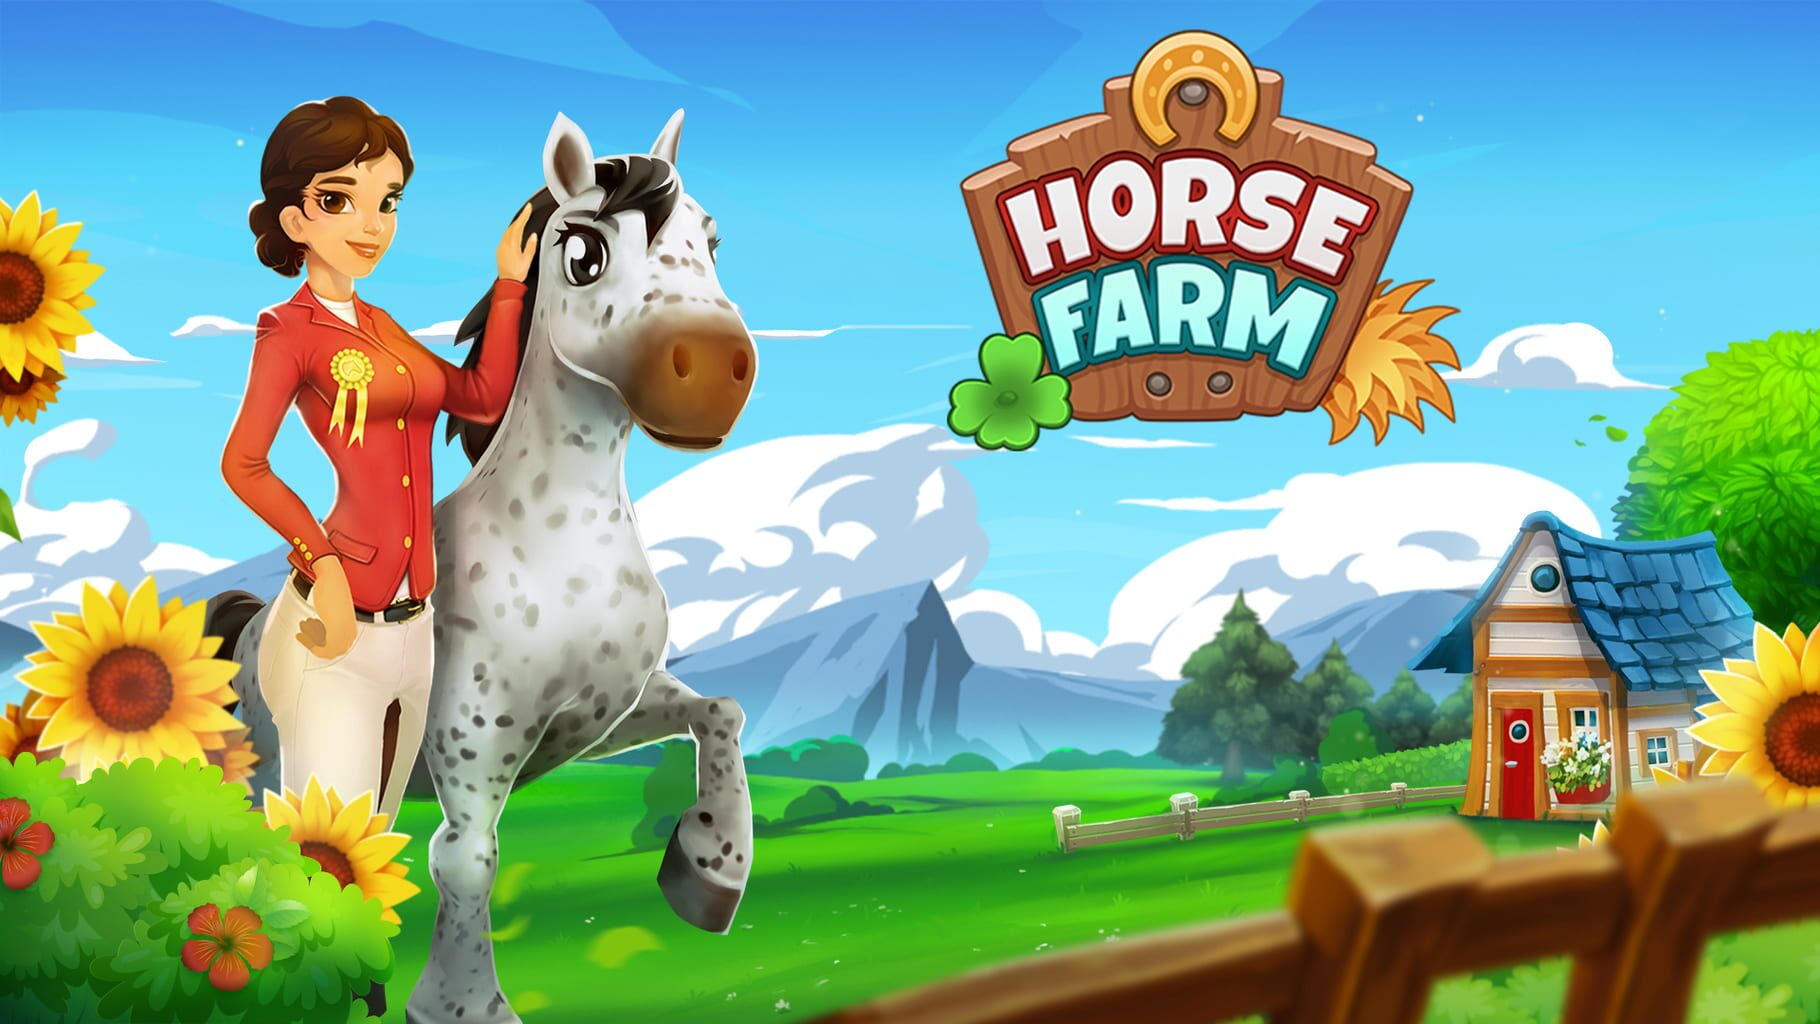 Horse Farm artwork